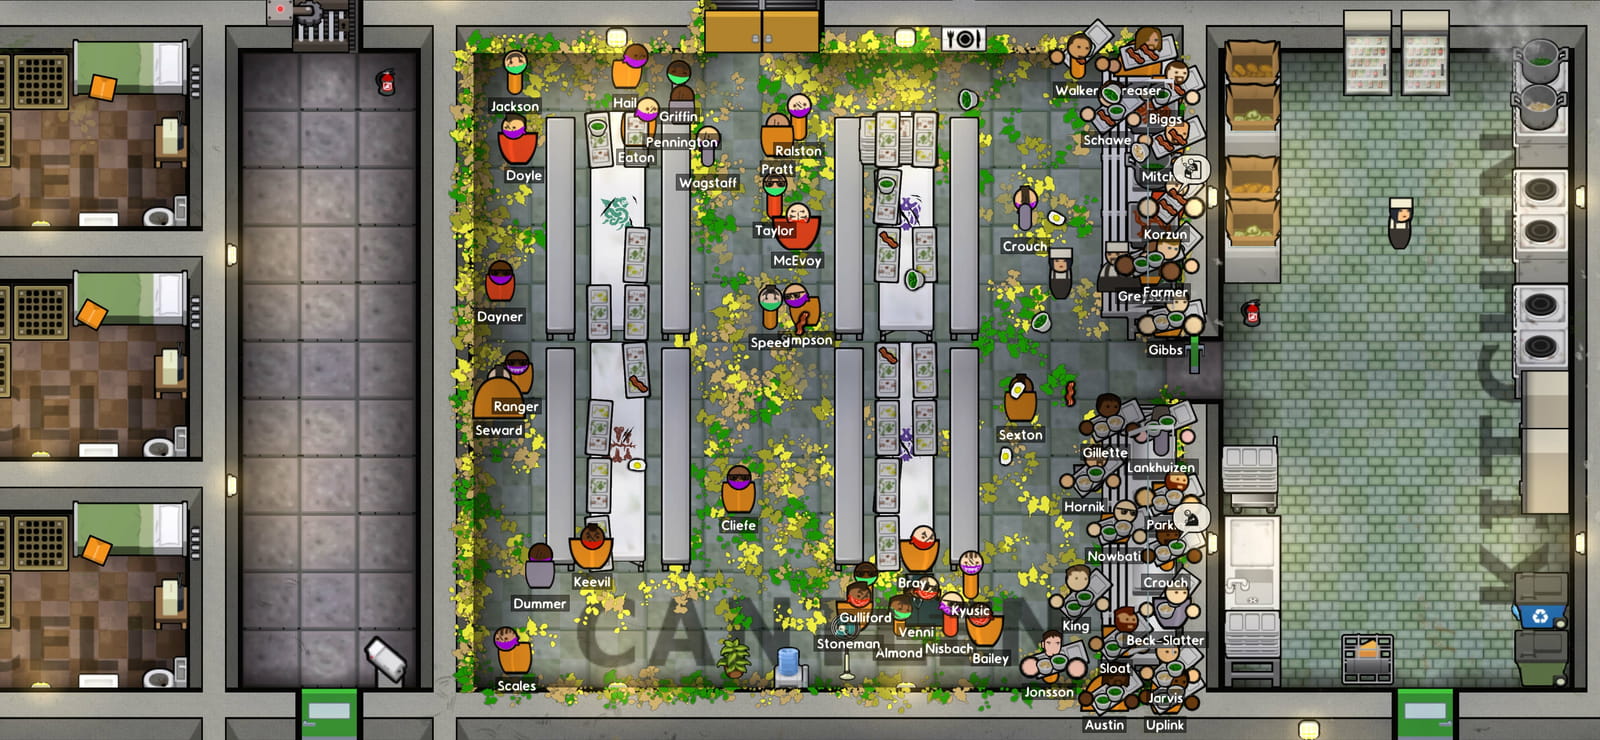 Prison Architect - Gangs